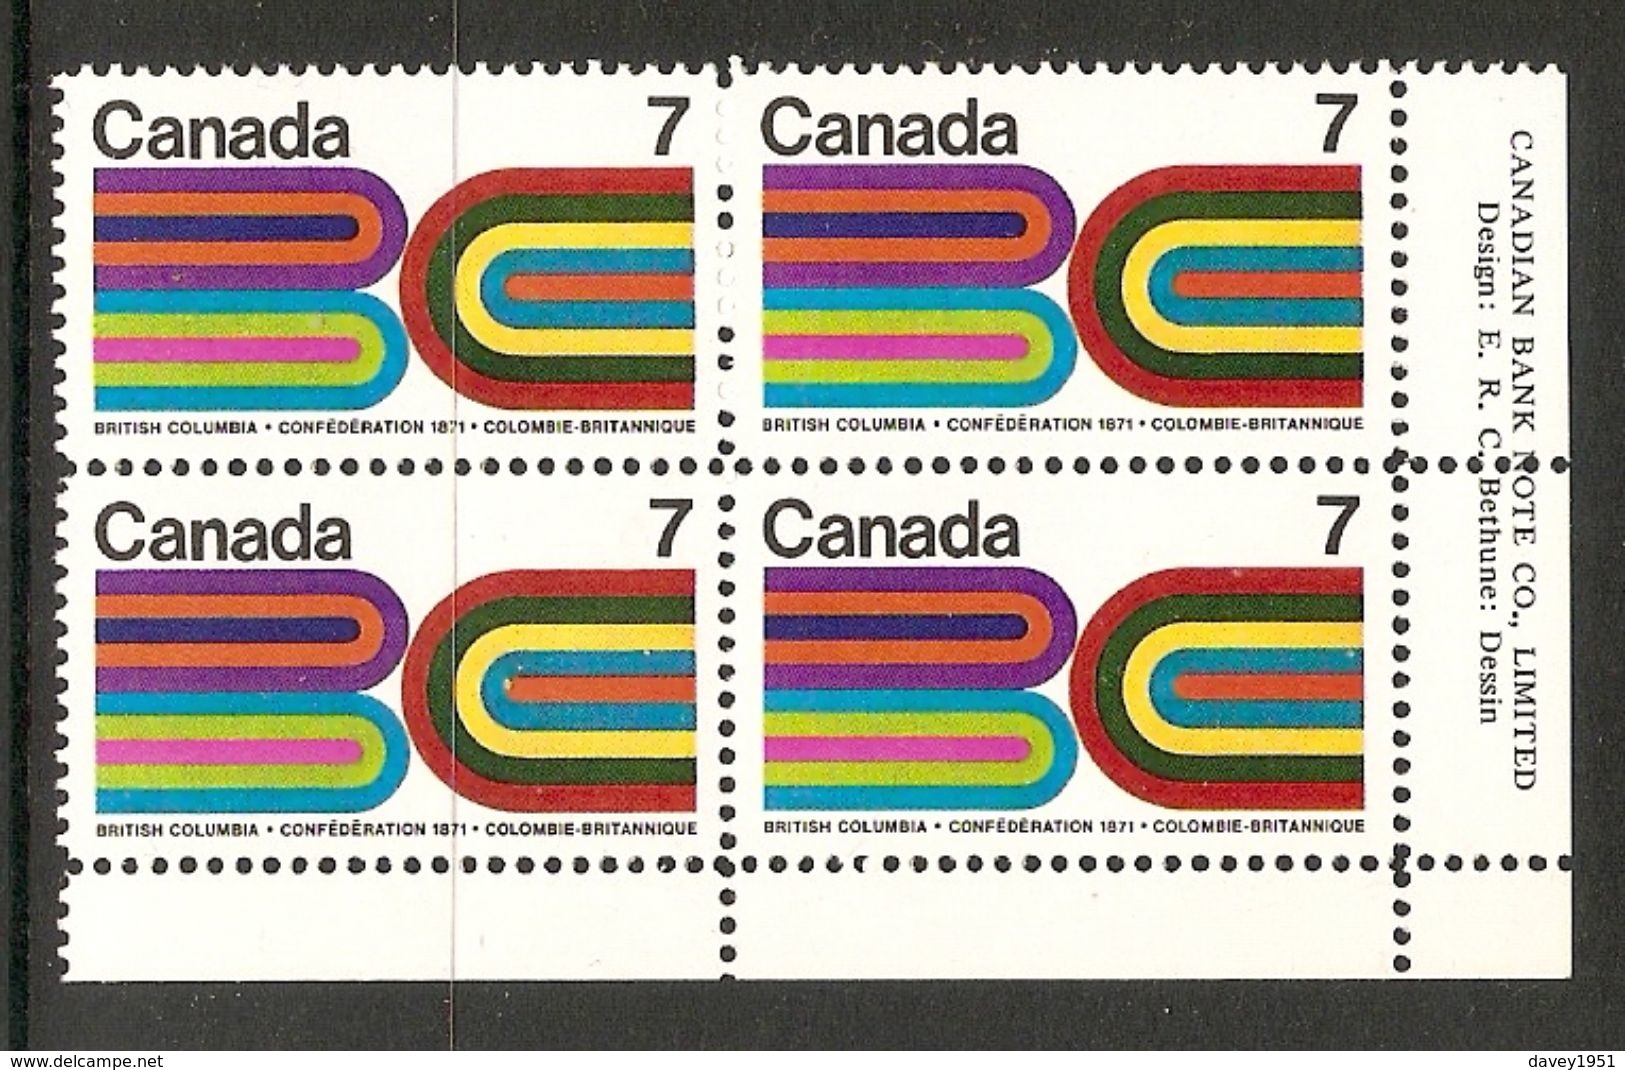 006316 Canada 1971 British Columbia 7c Plate Block LR MNH - Plate Number & Inscriptions